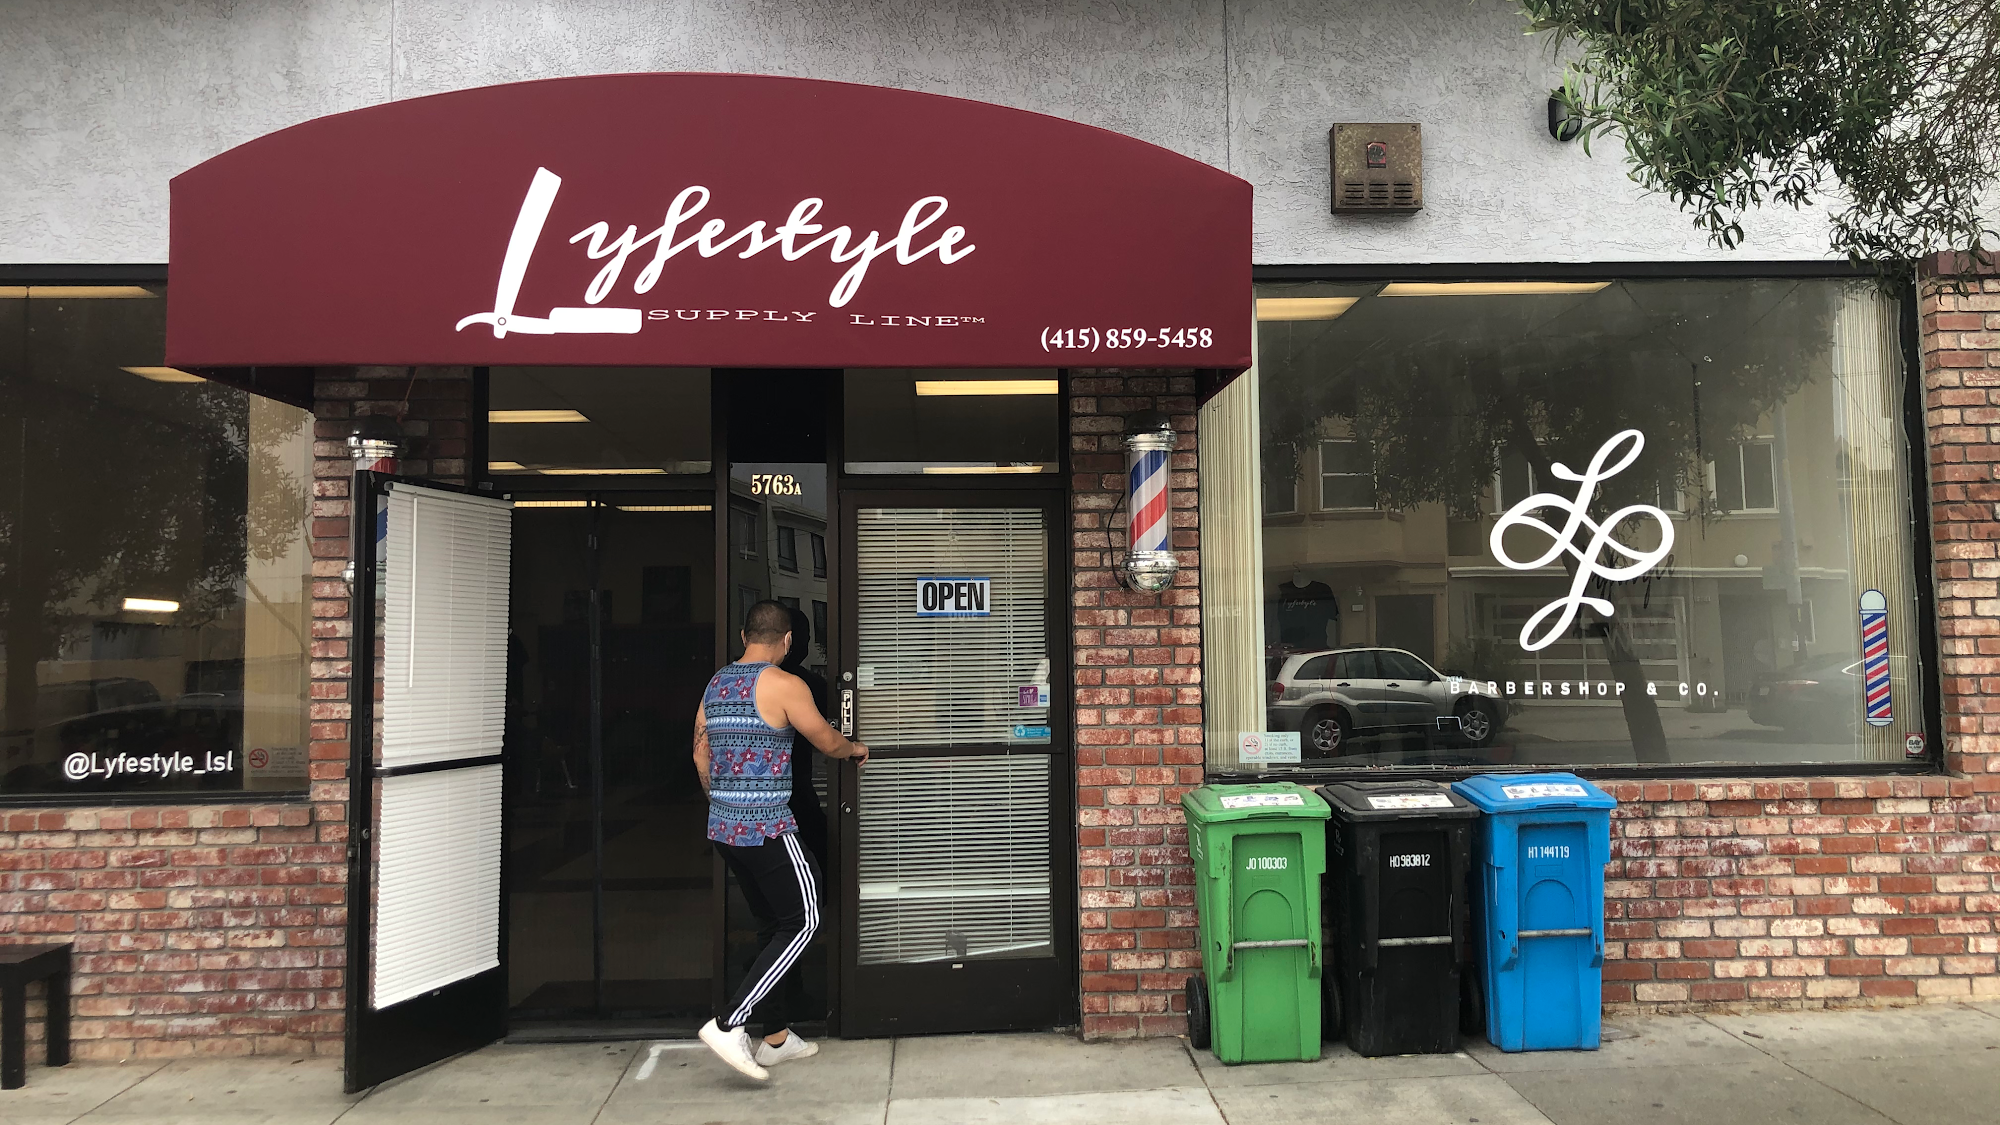 Lyfestyle Supply Line Barbershop & Co.